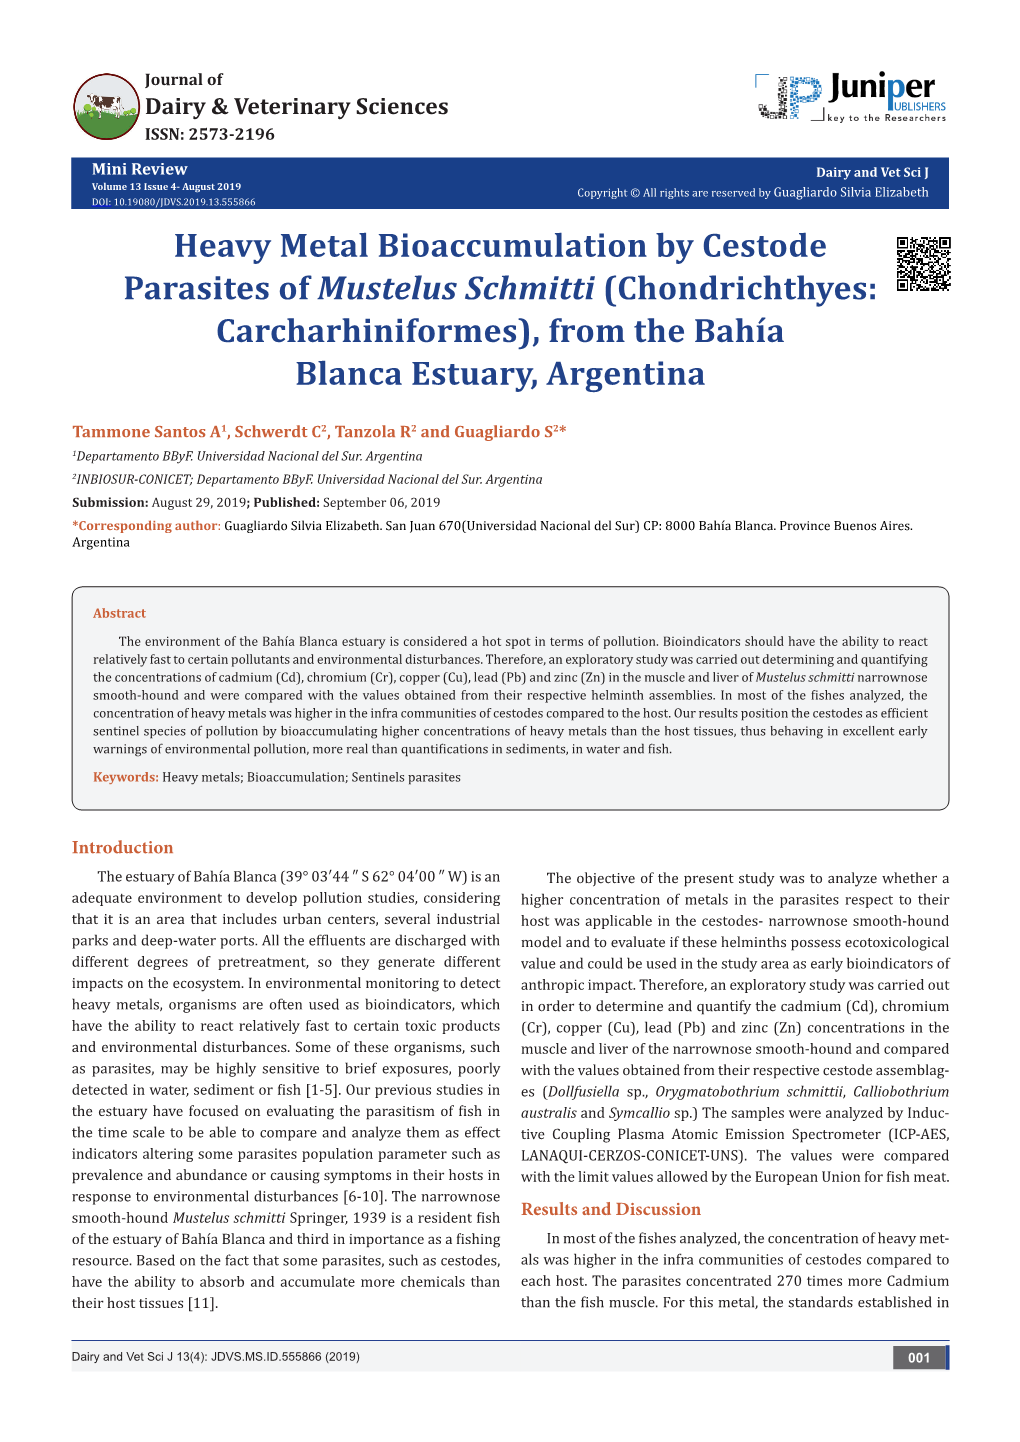 Heavy Metal Bioaccumulation by Cestode Parasites of Mustelus Schmitti (Chondrichthyes: Carcharhiniformes), from the Bahía Blanca Estuary, Argentina